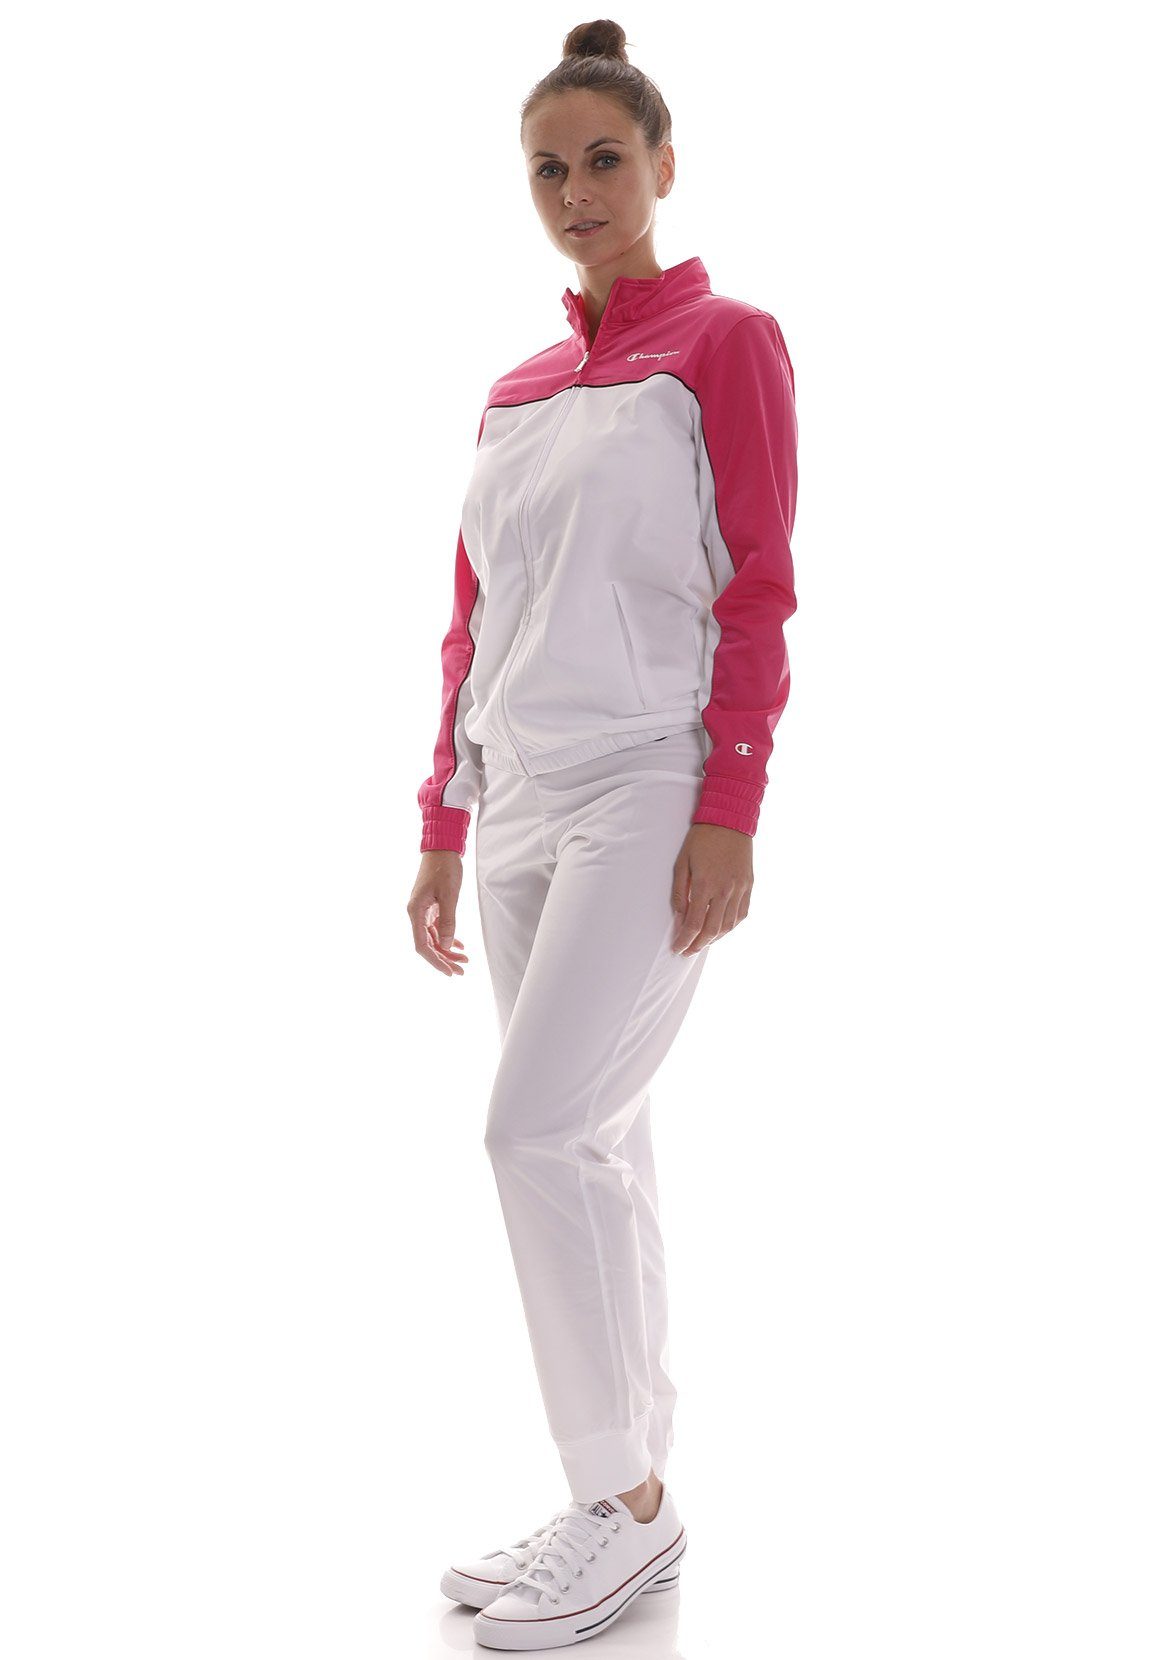 Champion Jogginghose Champion Damen Trainingsanzug 115149 WW001 WHT WHT FPL  Weiß Pink